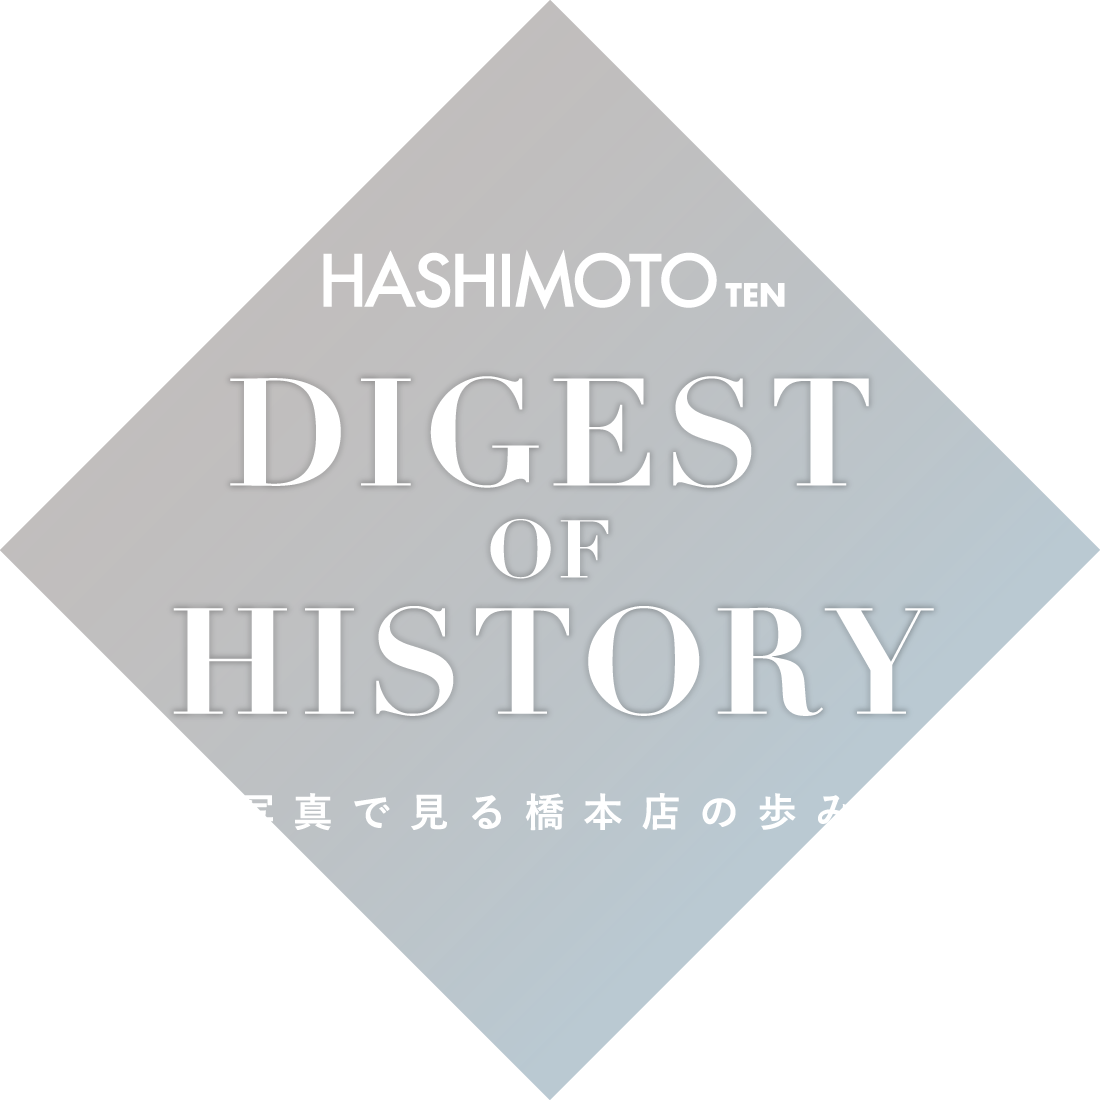 HASHIMOTOTEN DIGEST OF HISTORY 写真で見る橋本店の歩み